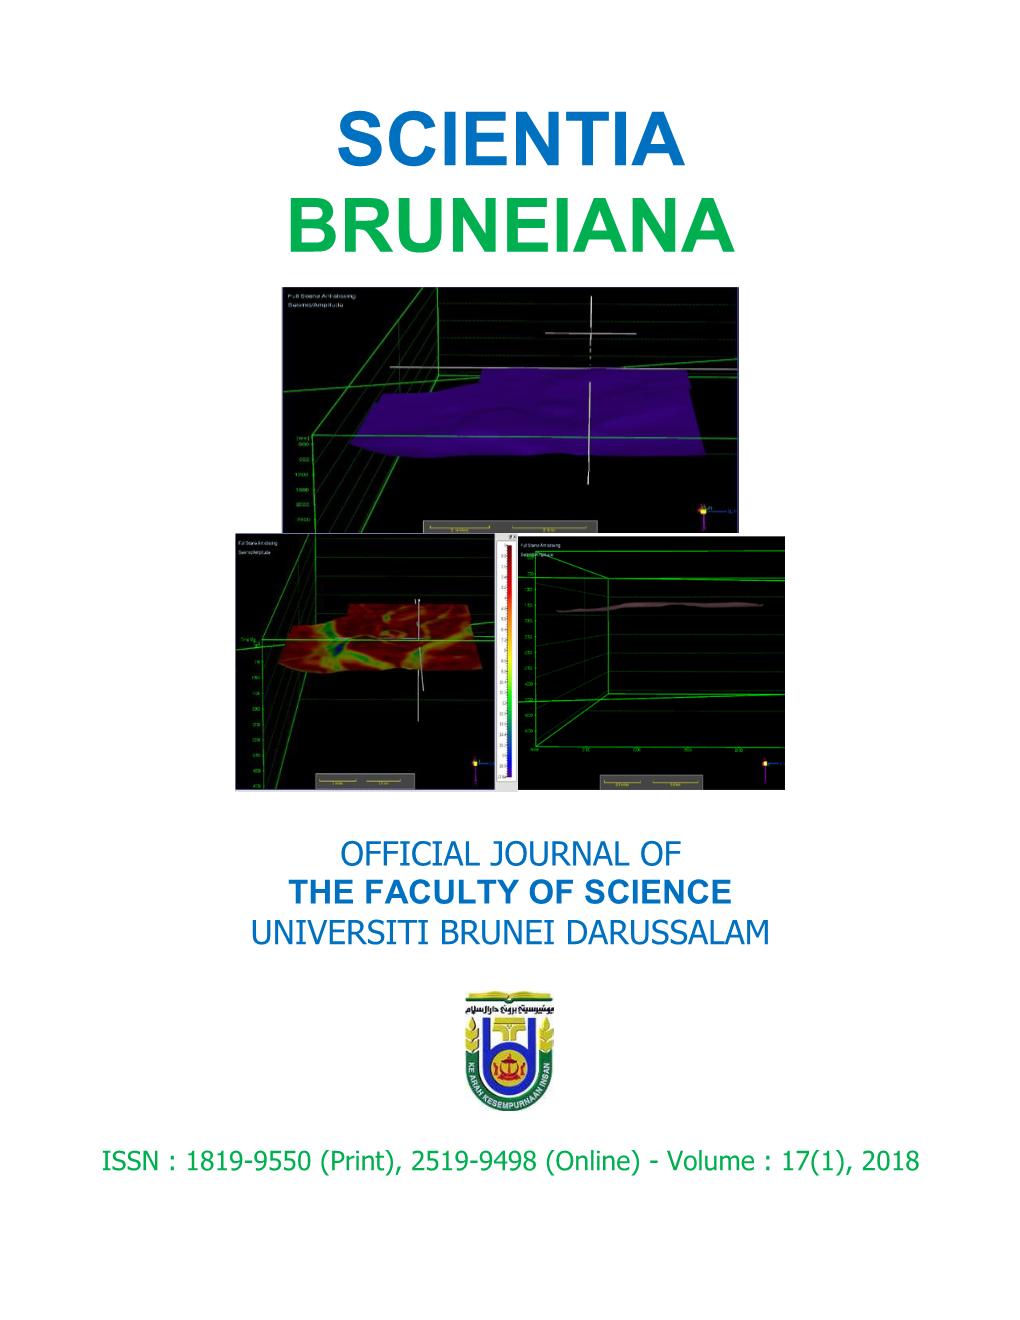 Scientia Bruneiana